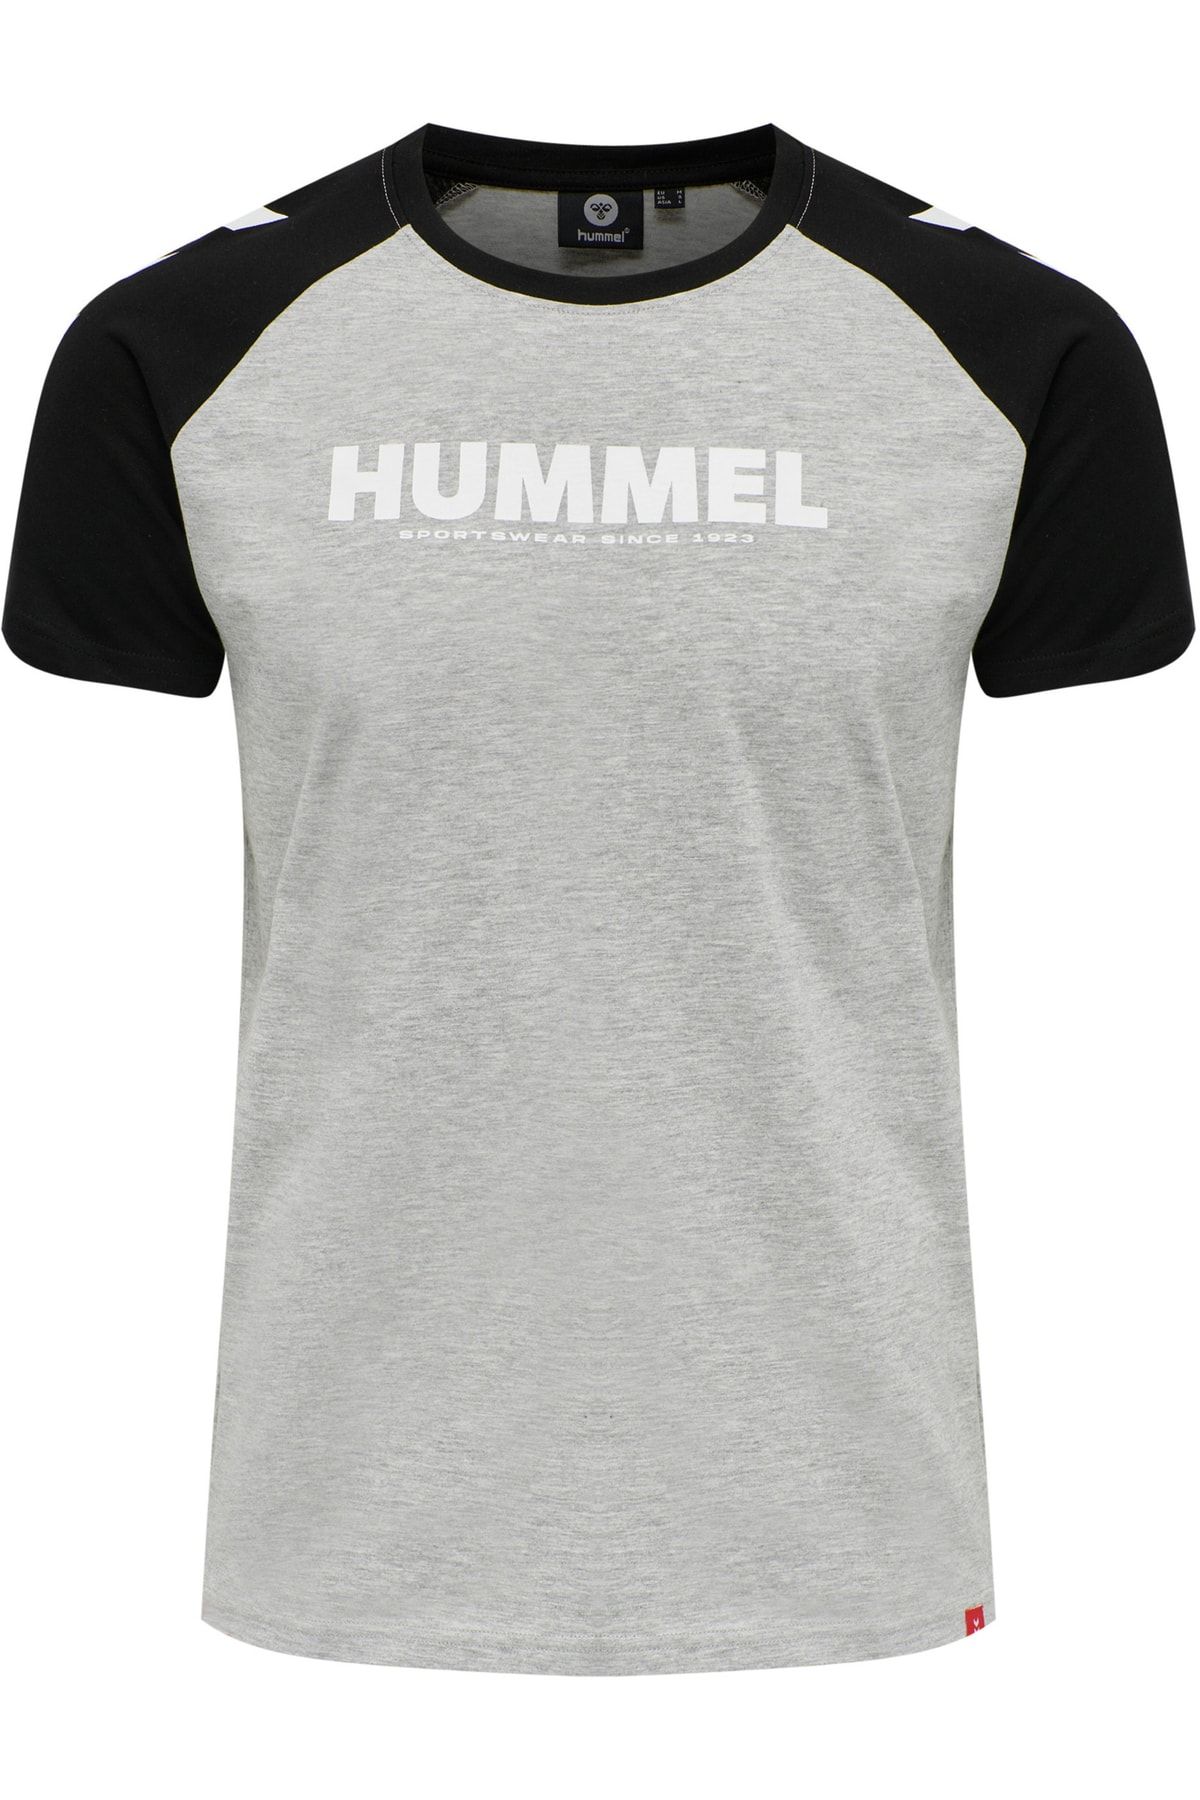 HUMMEL hmlLEGACY BLOCKED T-SHIRT - Trendyol